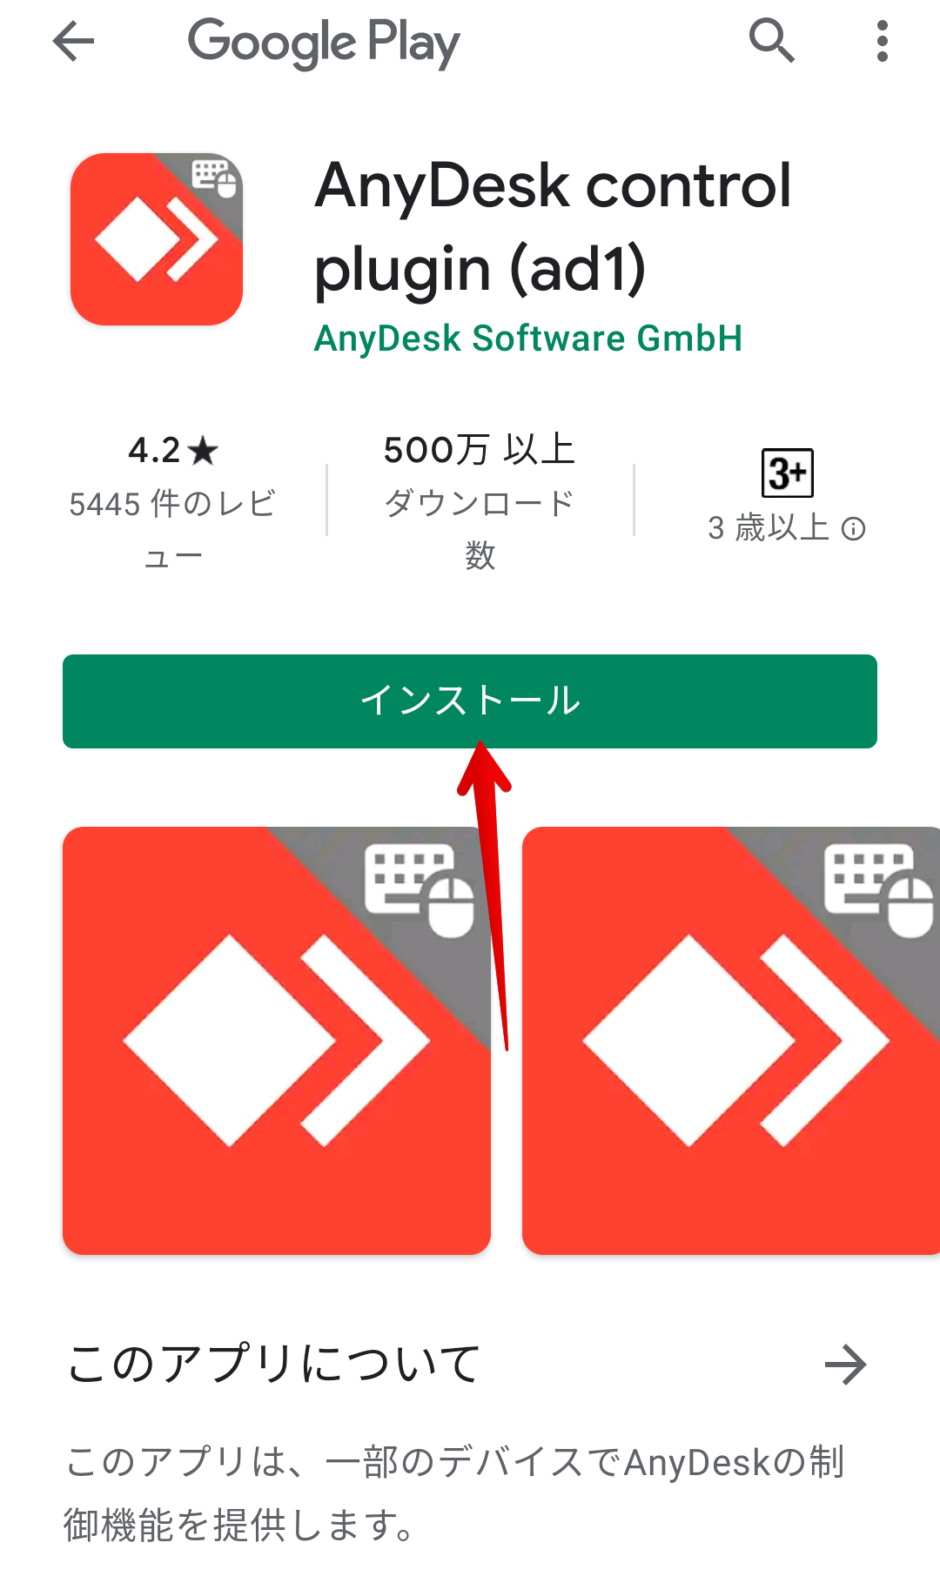 anydesk control service ad1